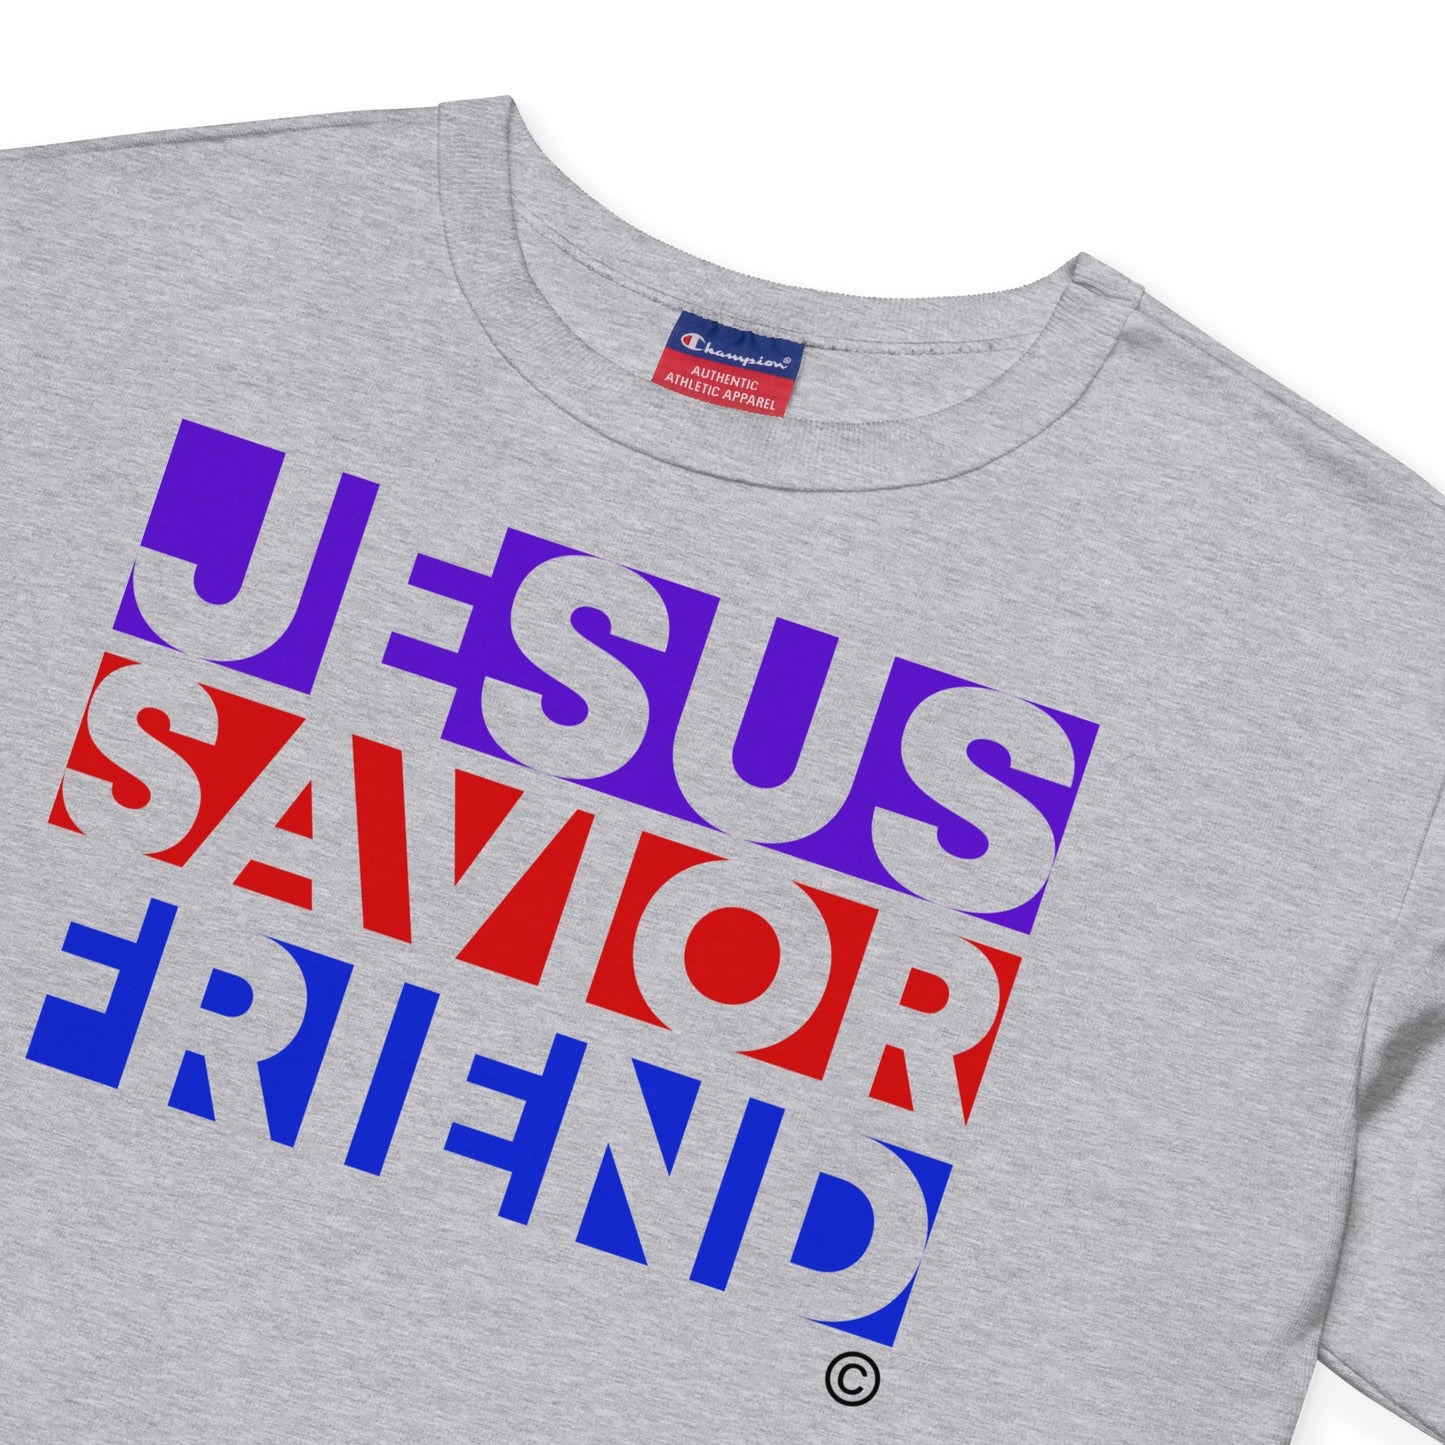 Jesus Savior Friend Champion Crop Top